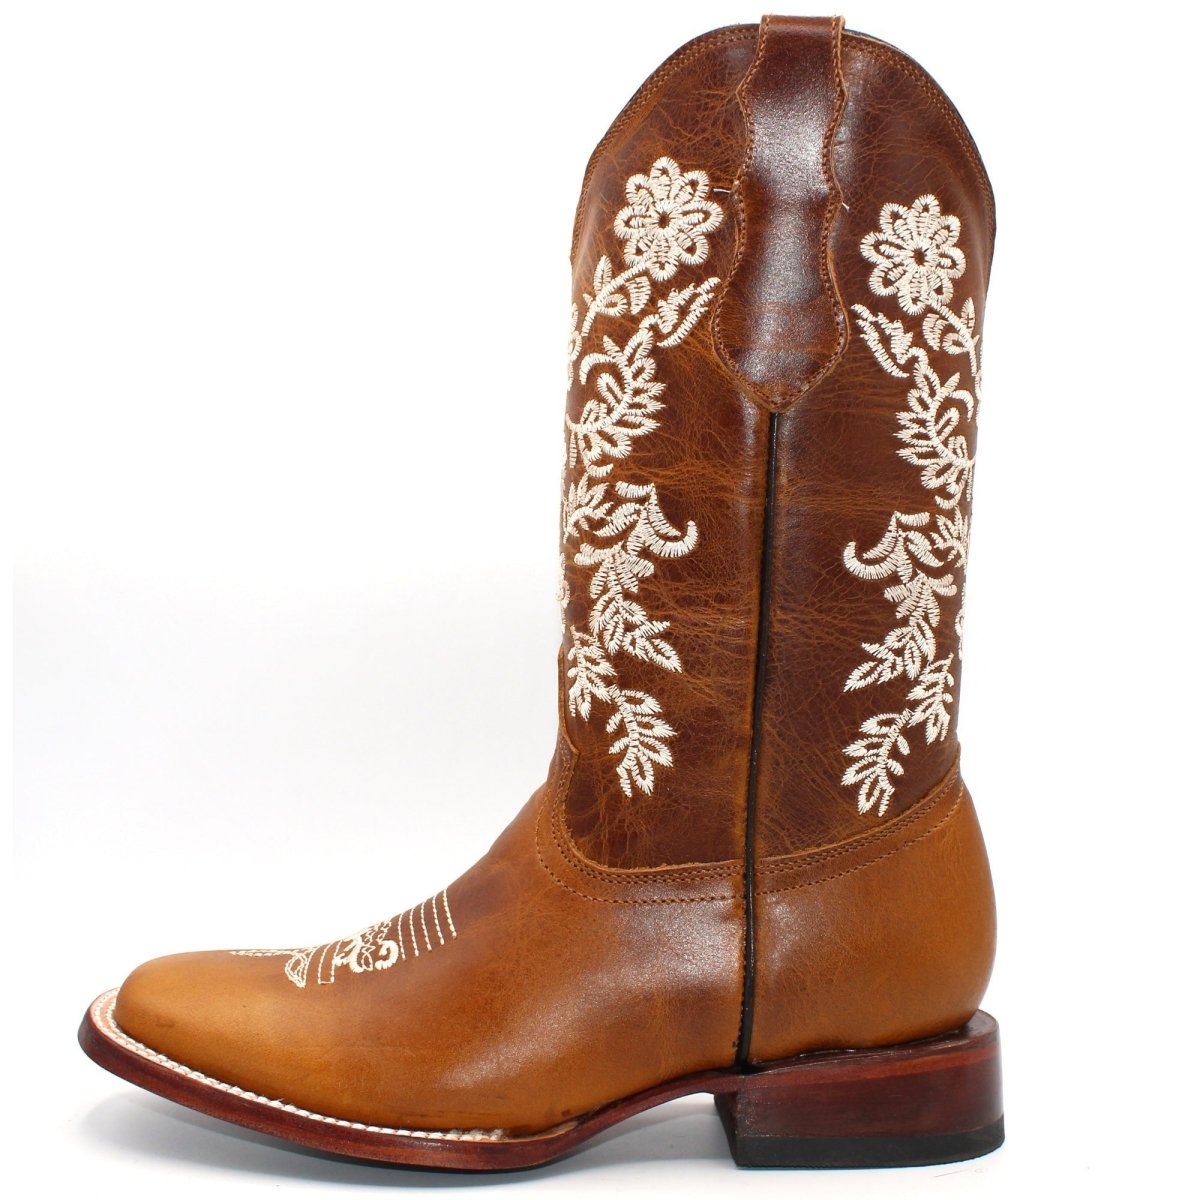 Women's Wide Square Toe Western Boot - White Flowers - CharroAzteca.com